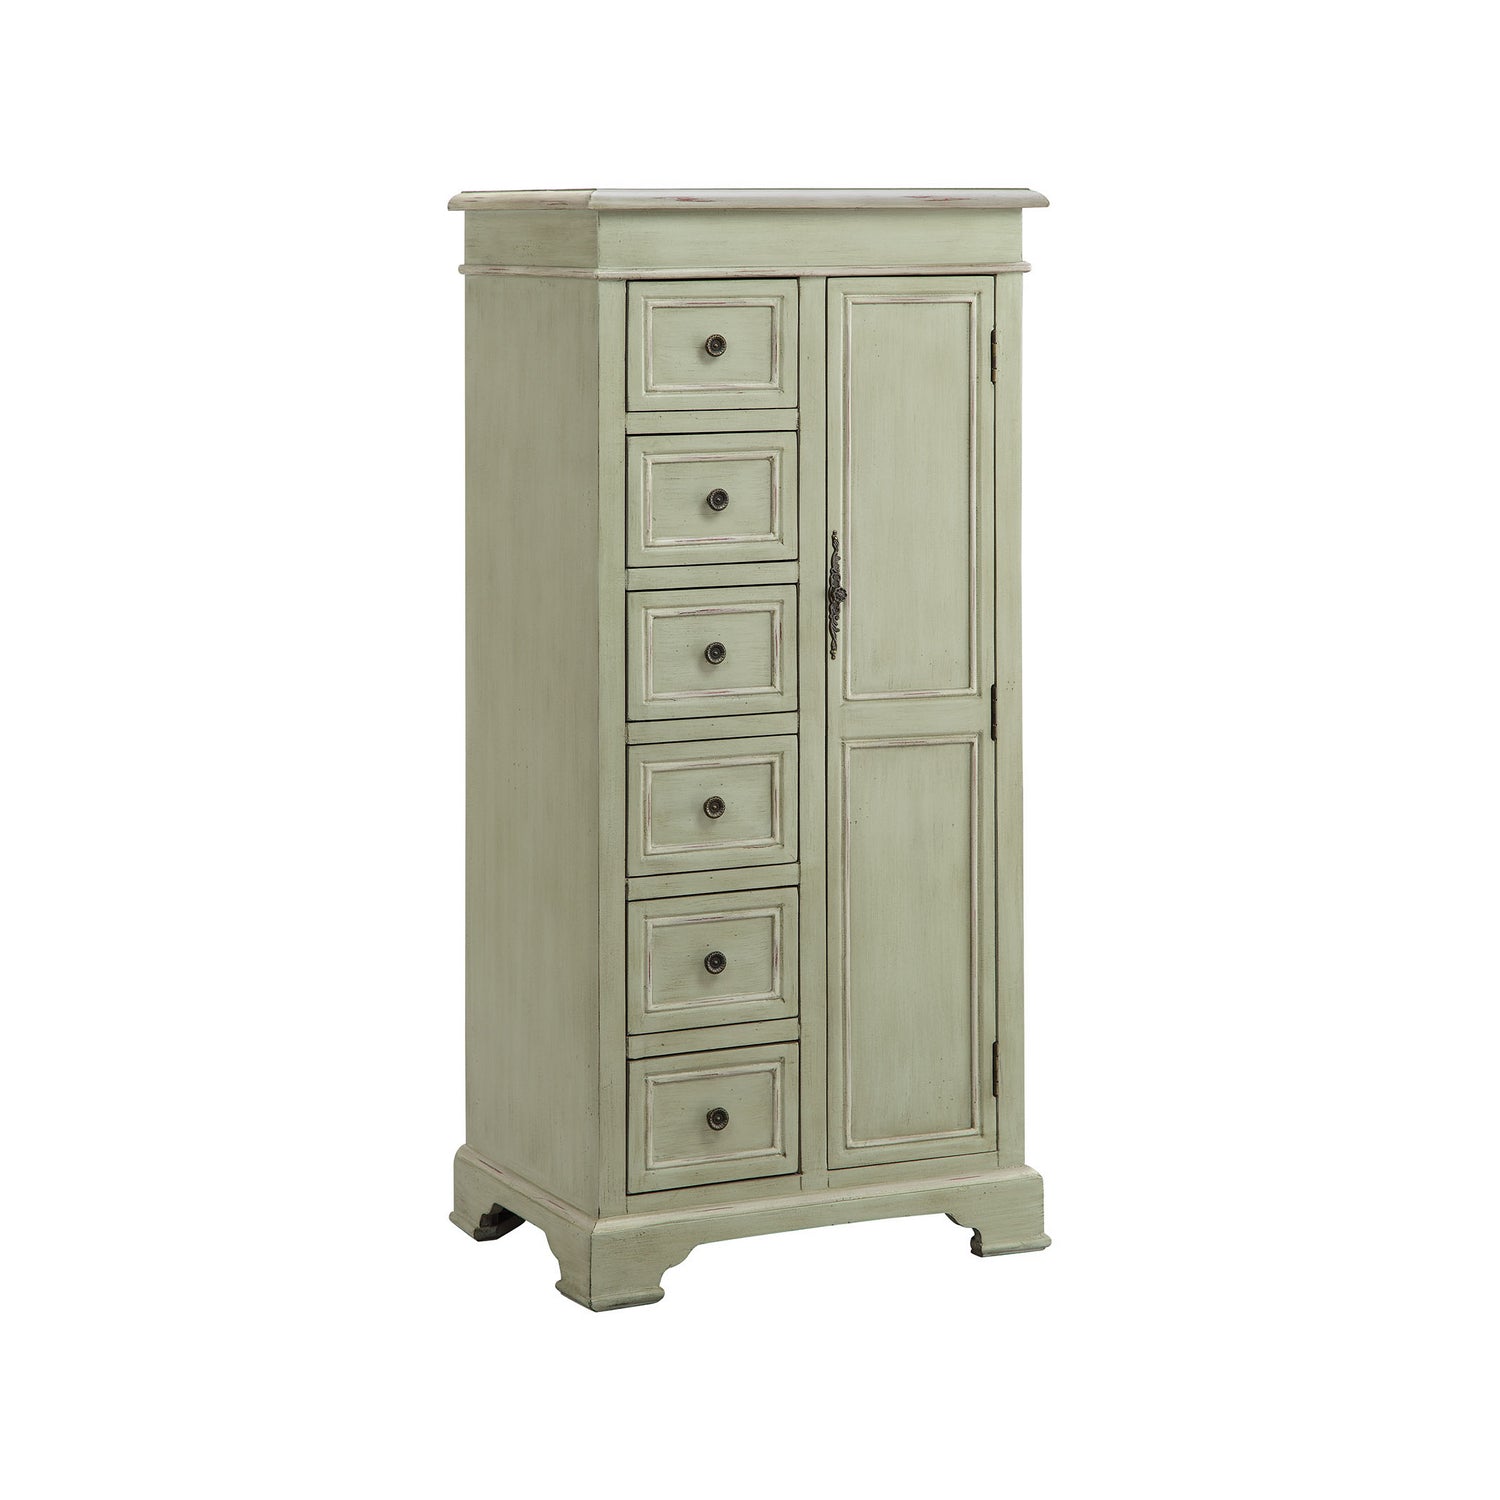 ELK Home - 47757 - Cabinet - Chesapeake - Antique Green